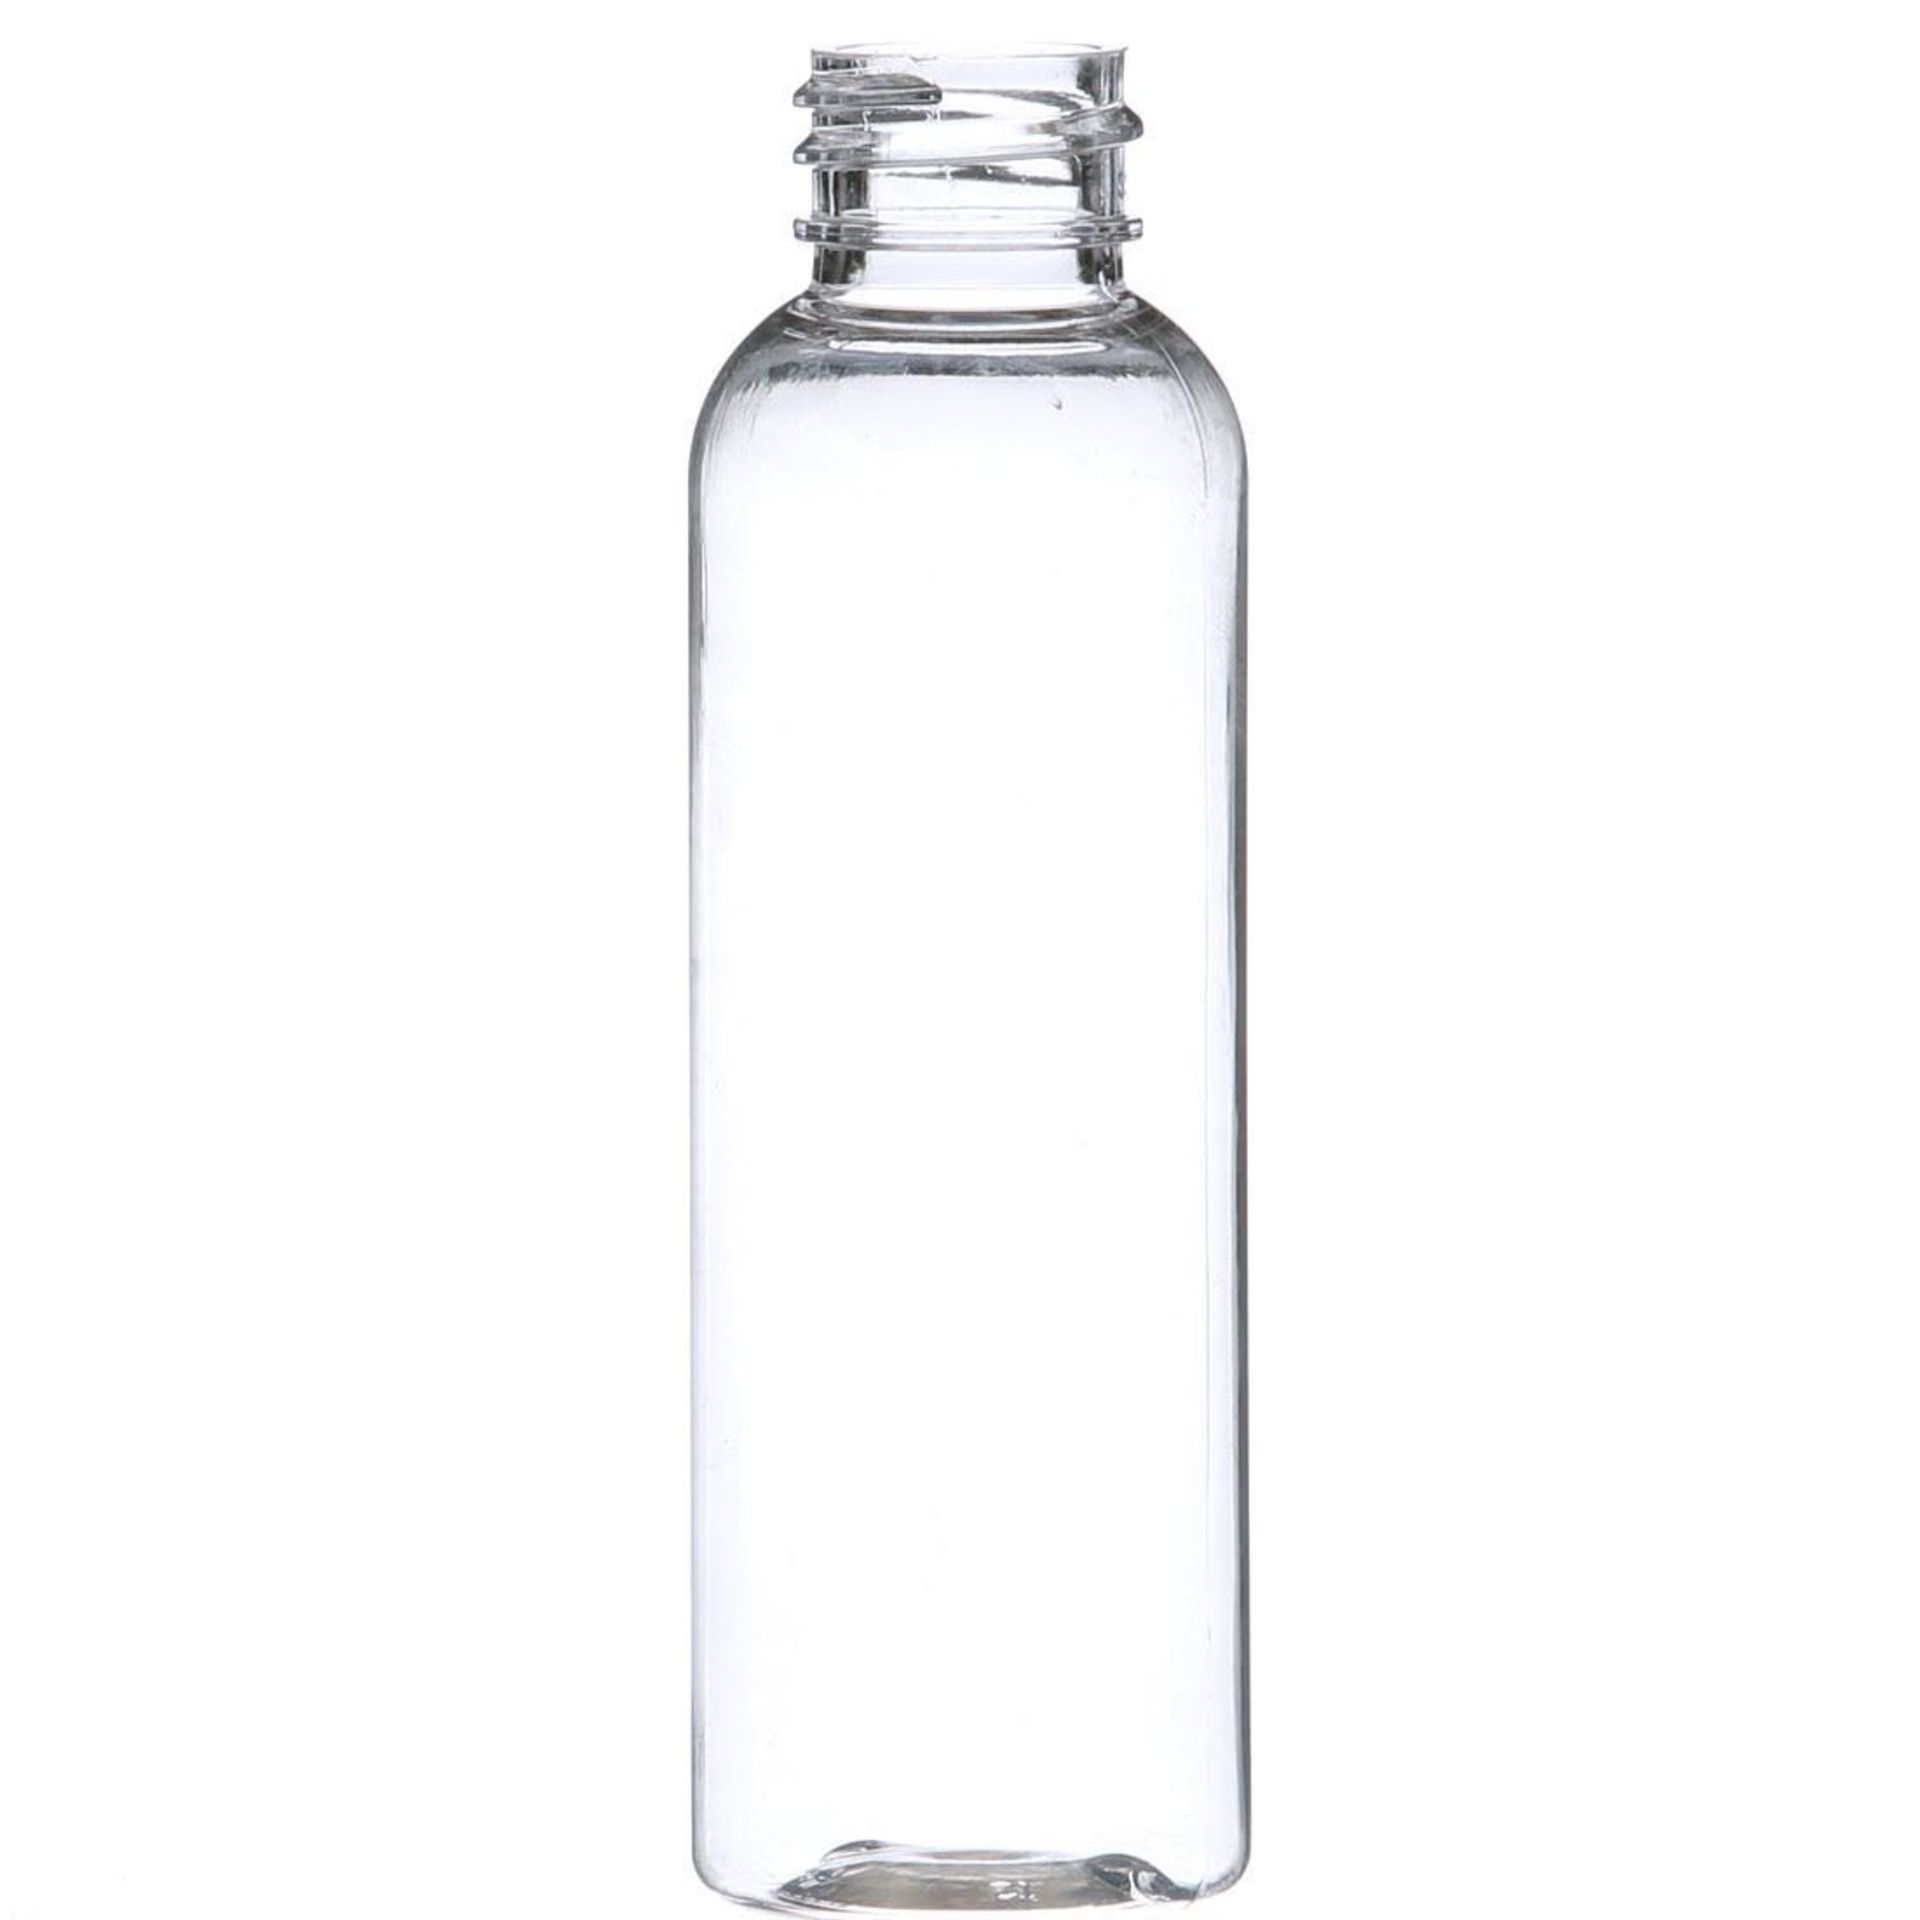 99,500 - Clear Plastic Bullet 2 oz Empty Bottles, 18-410 Threading Neck, 4.25" Tall 1.25" Diameter